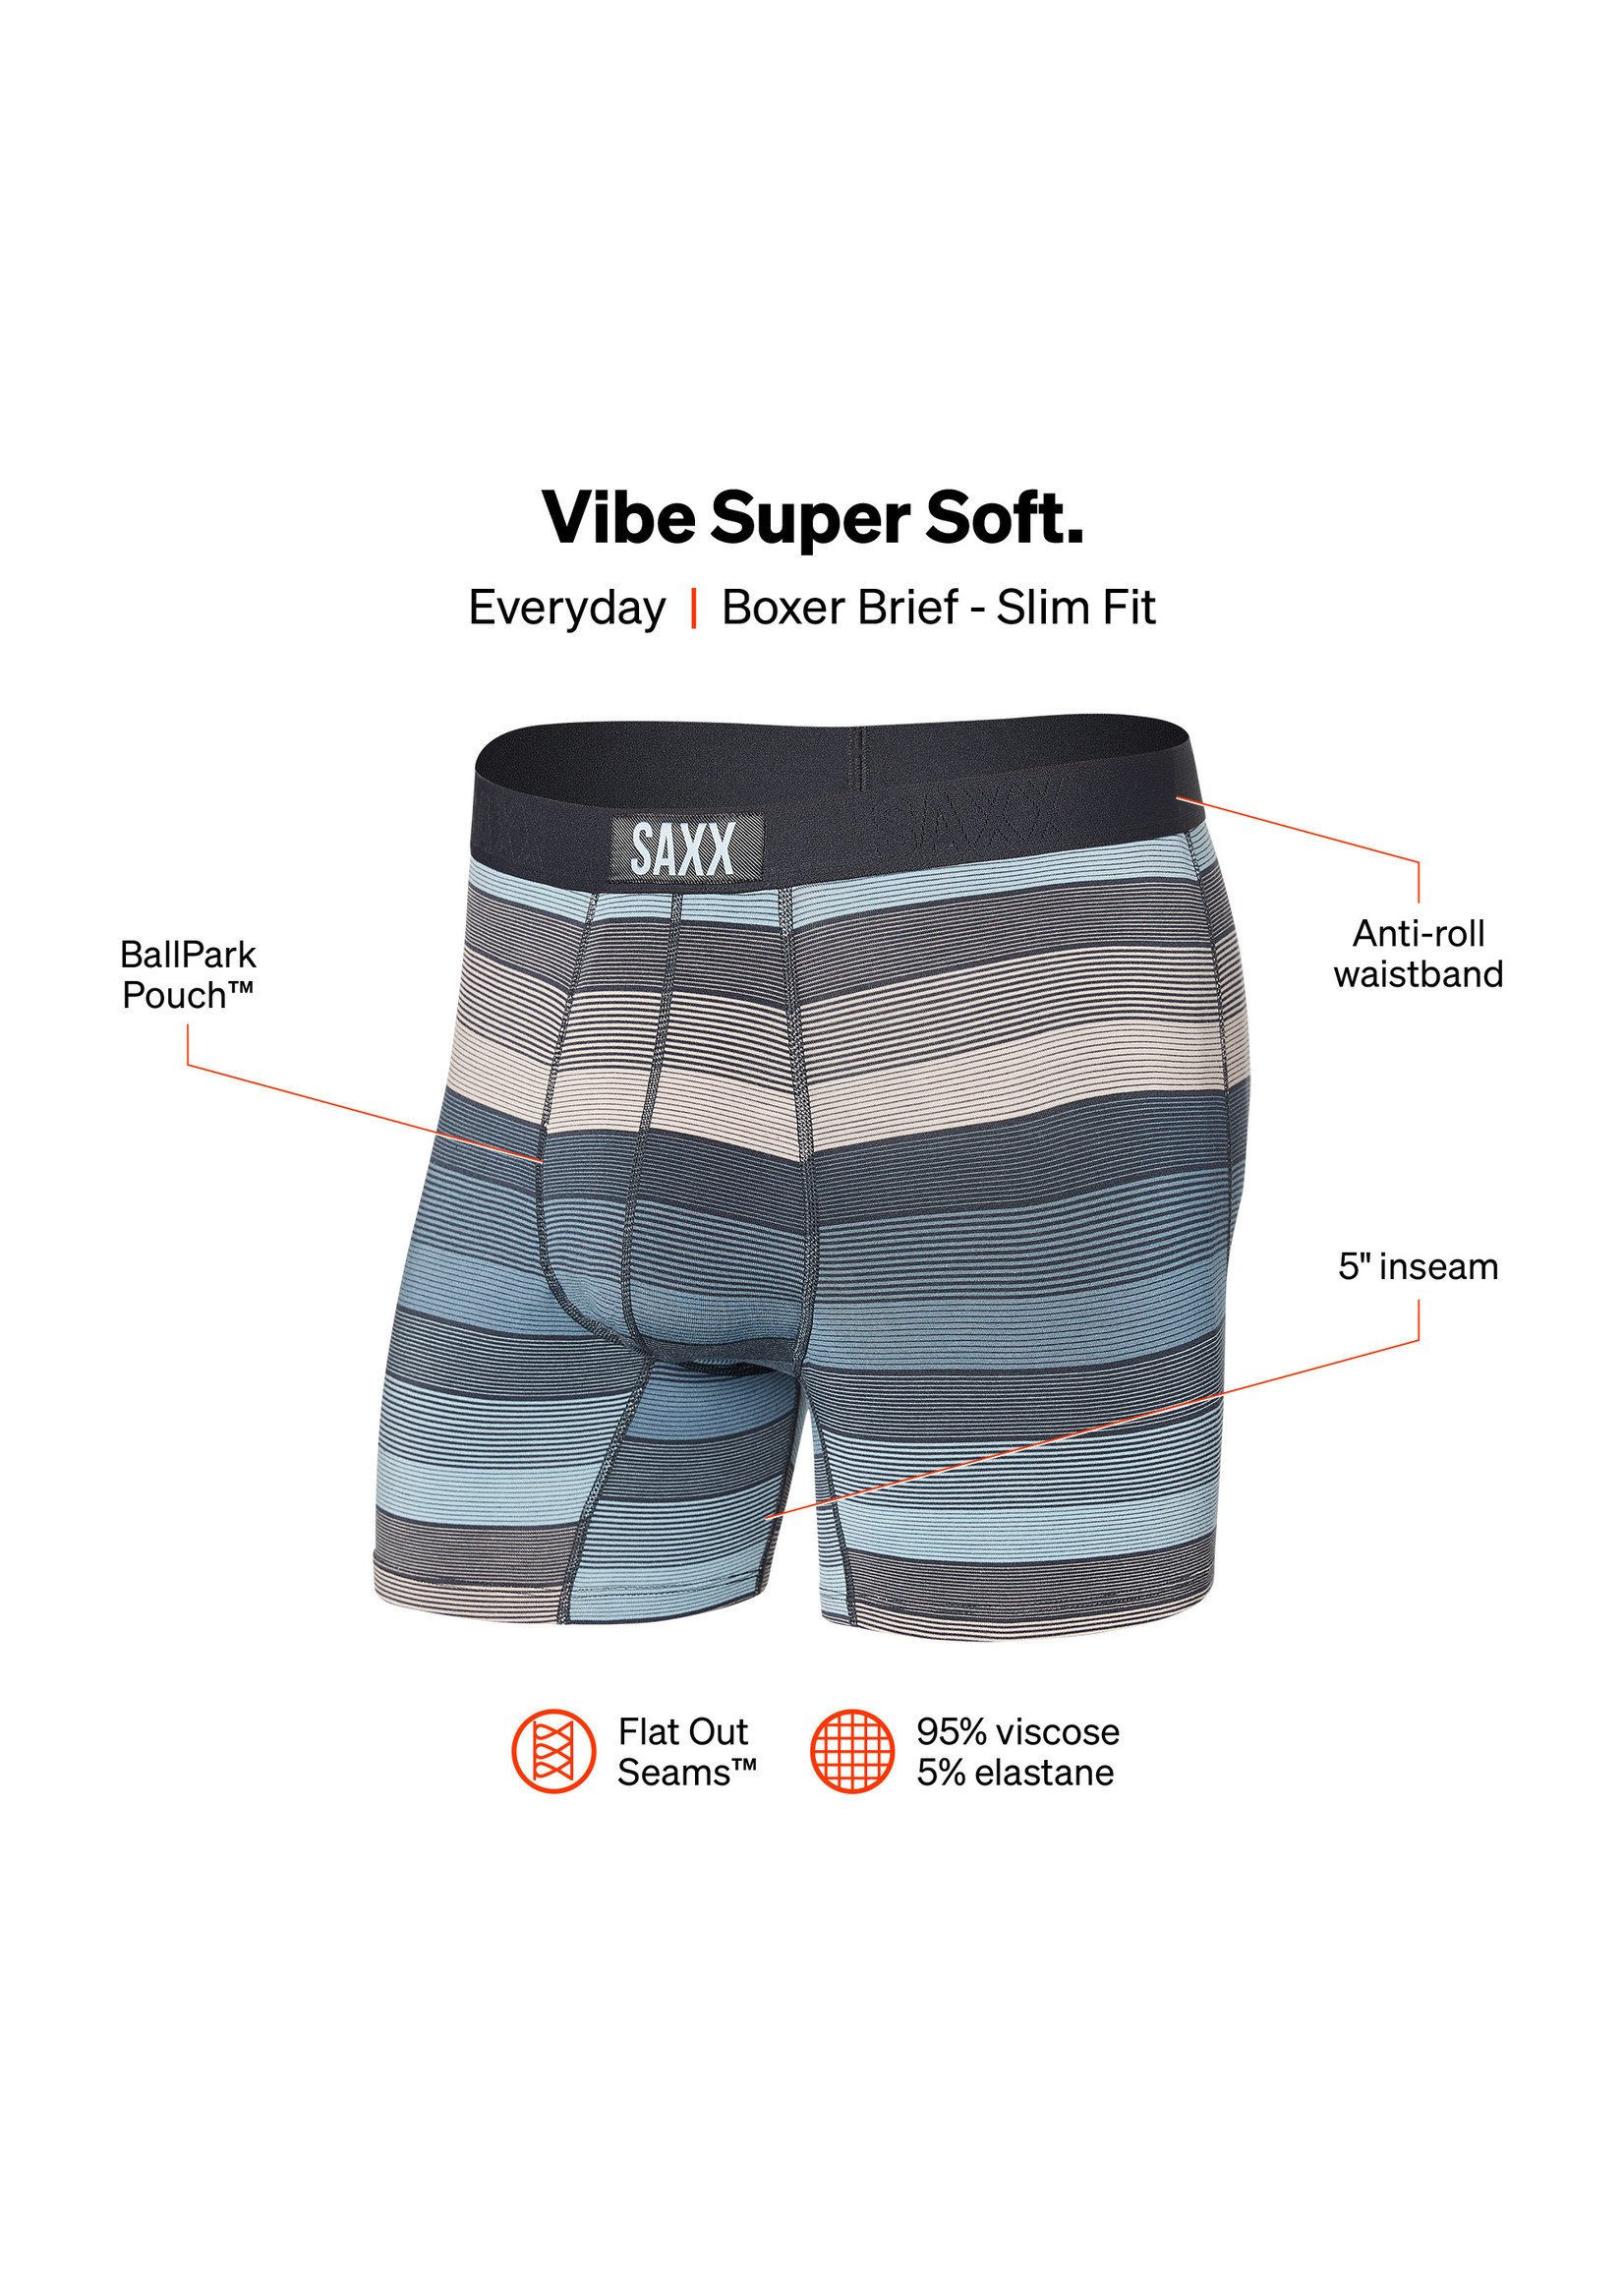 Saxx Men's Underwear - Vibe Super Soft Boxer Briefs with Built-in